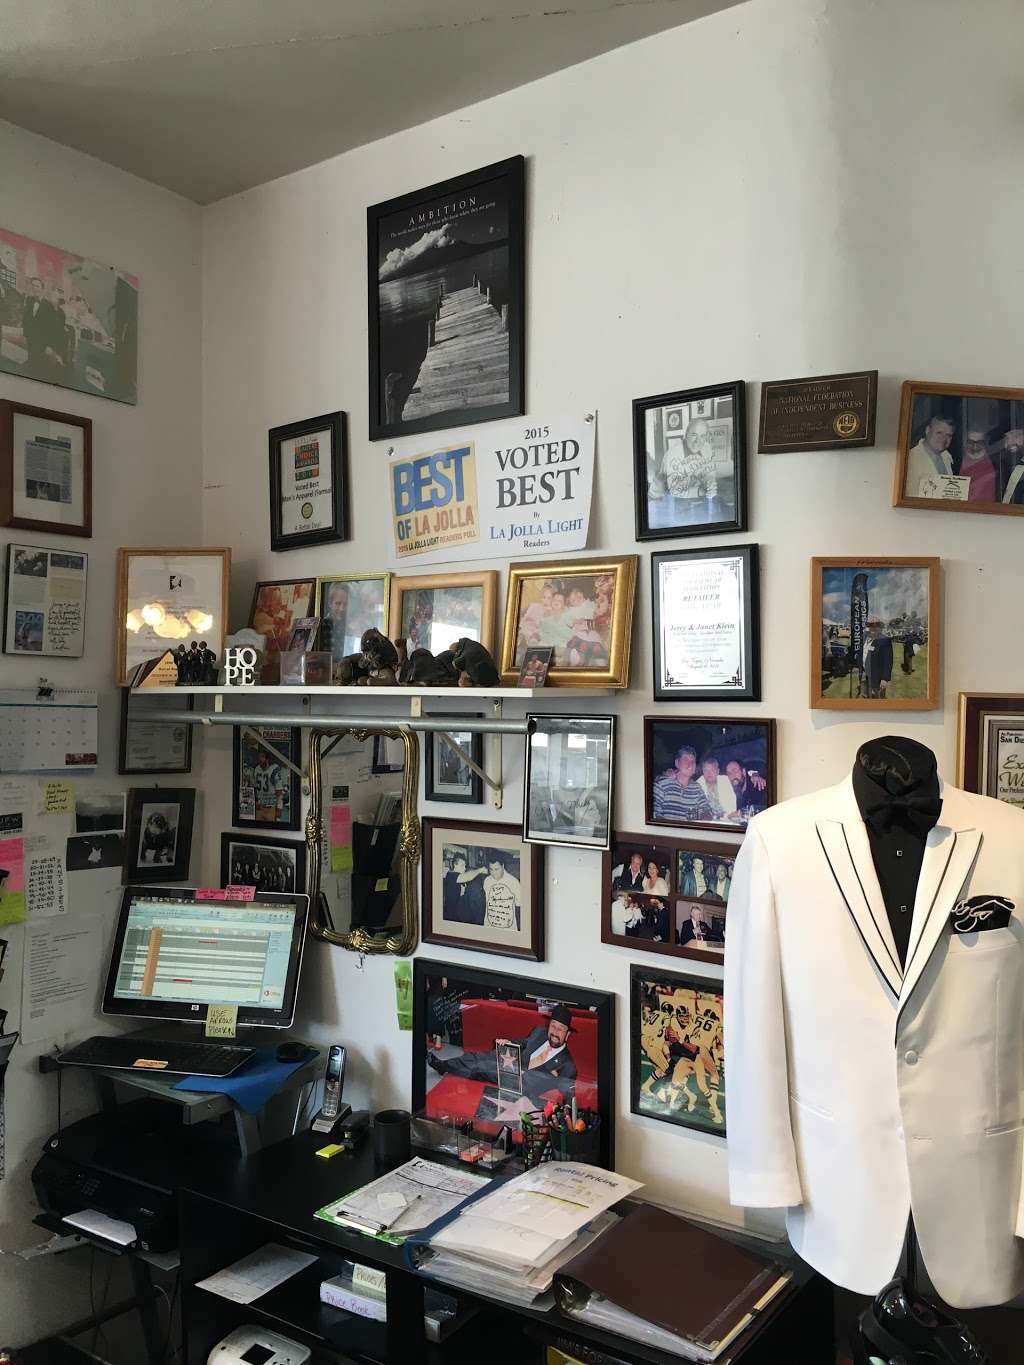 A Better Deal Tuxedos & Suits | 369 Bird Rock Ave, La Jolla, CA 92037, USA